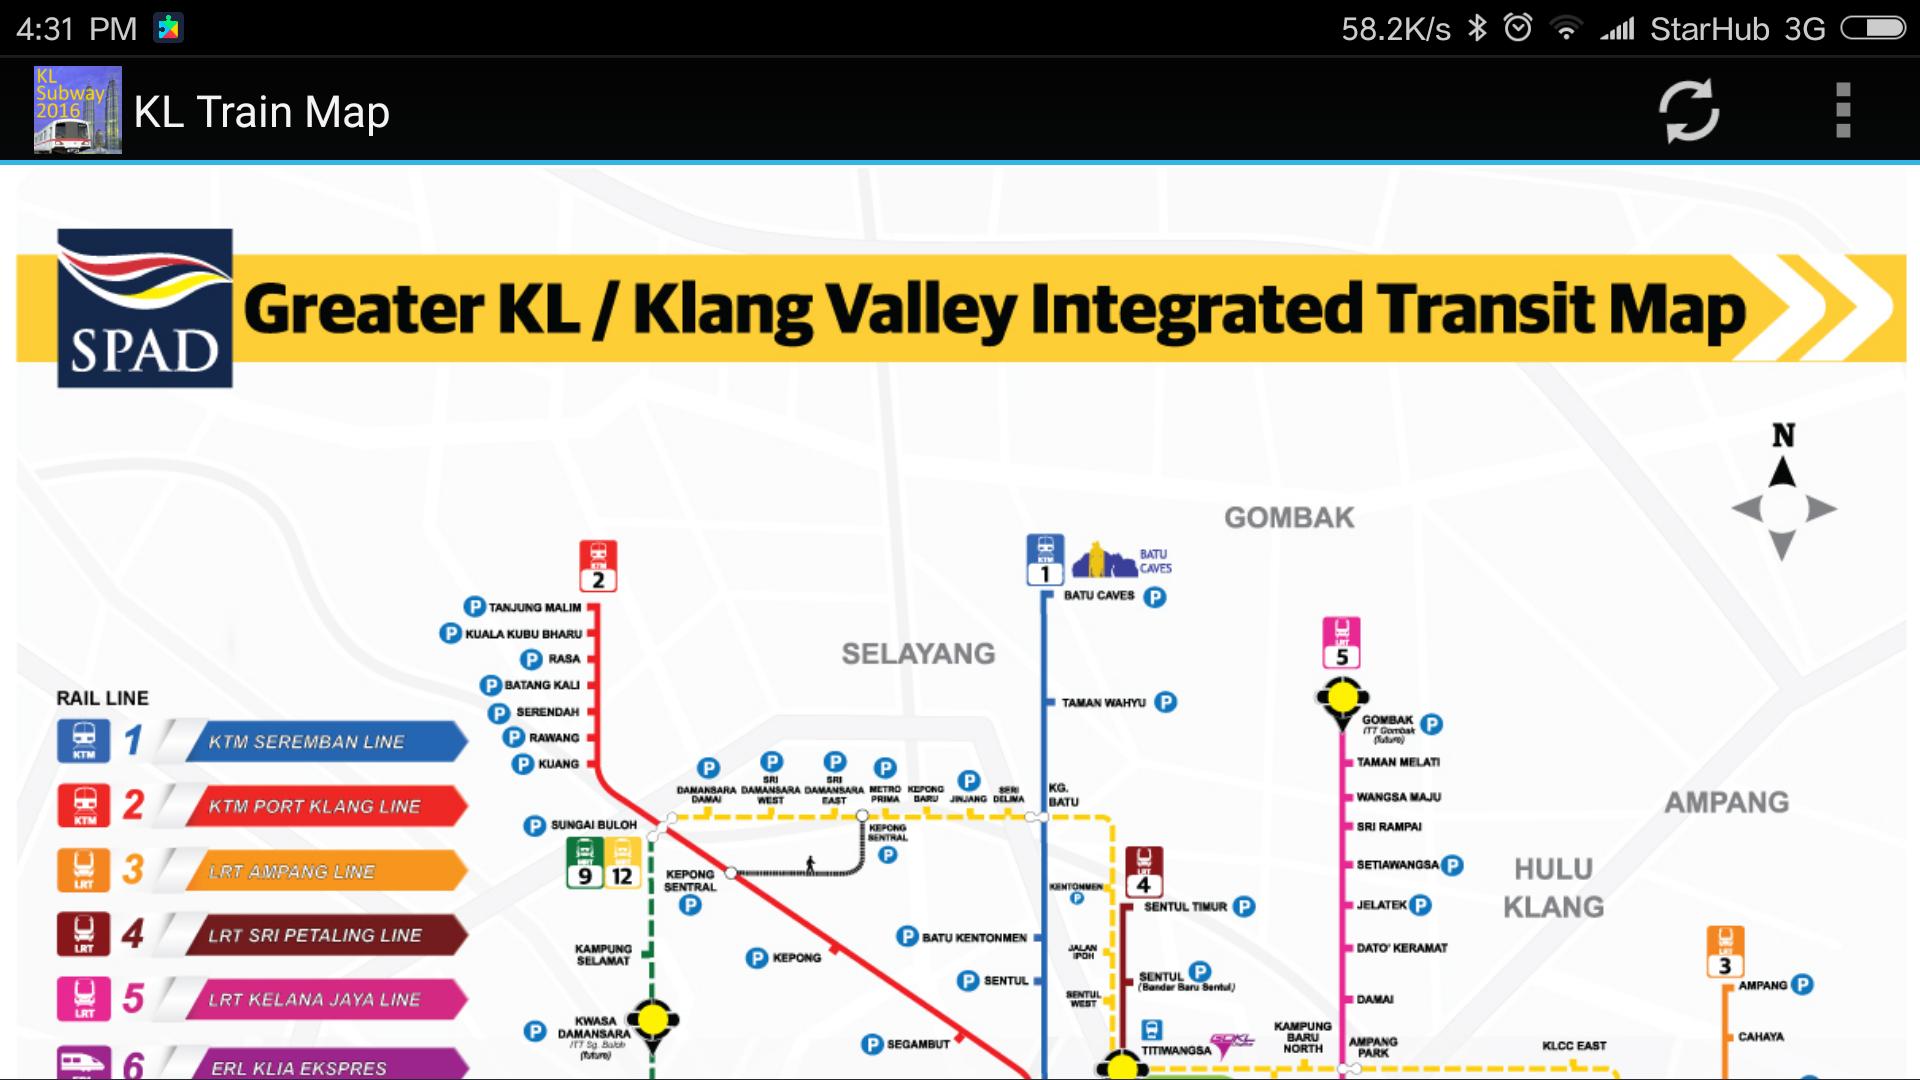 Kuala Lumpur (KL) MRT LRT Train Map 2019 for Android - APK Download